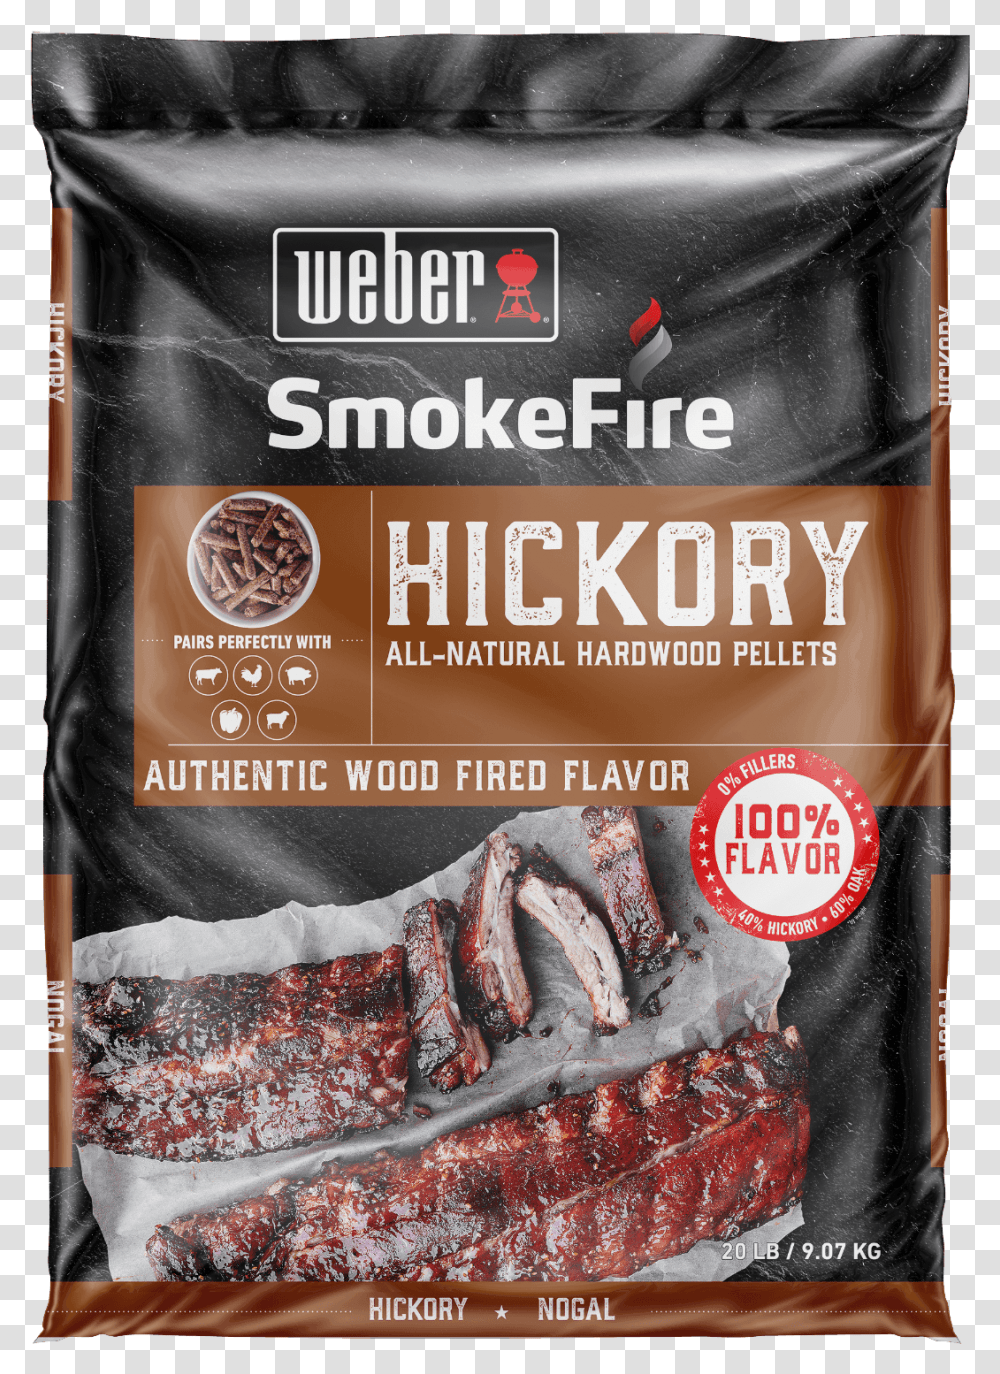 Hickory All Natural Hardwood Pellets View Weber Smokefire Pellet, Sweets, Food, Plant Transparent Png